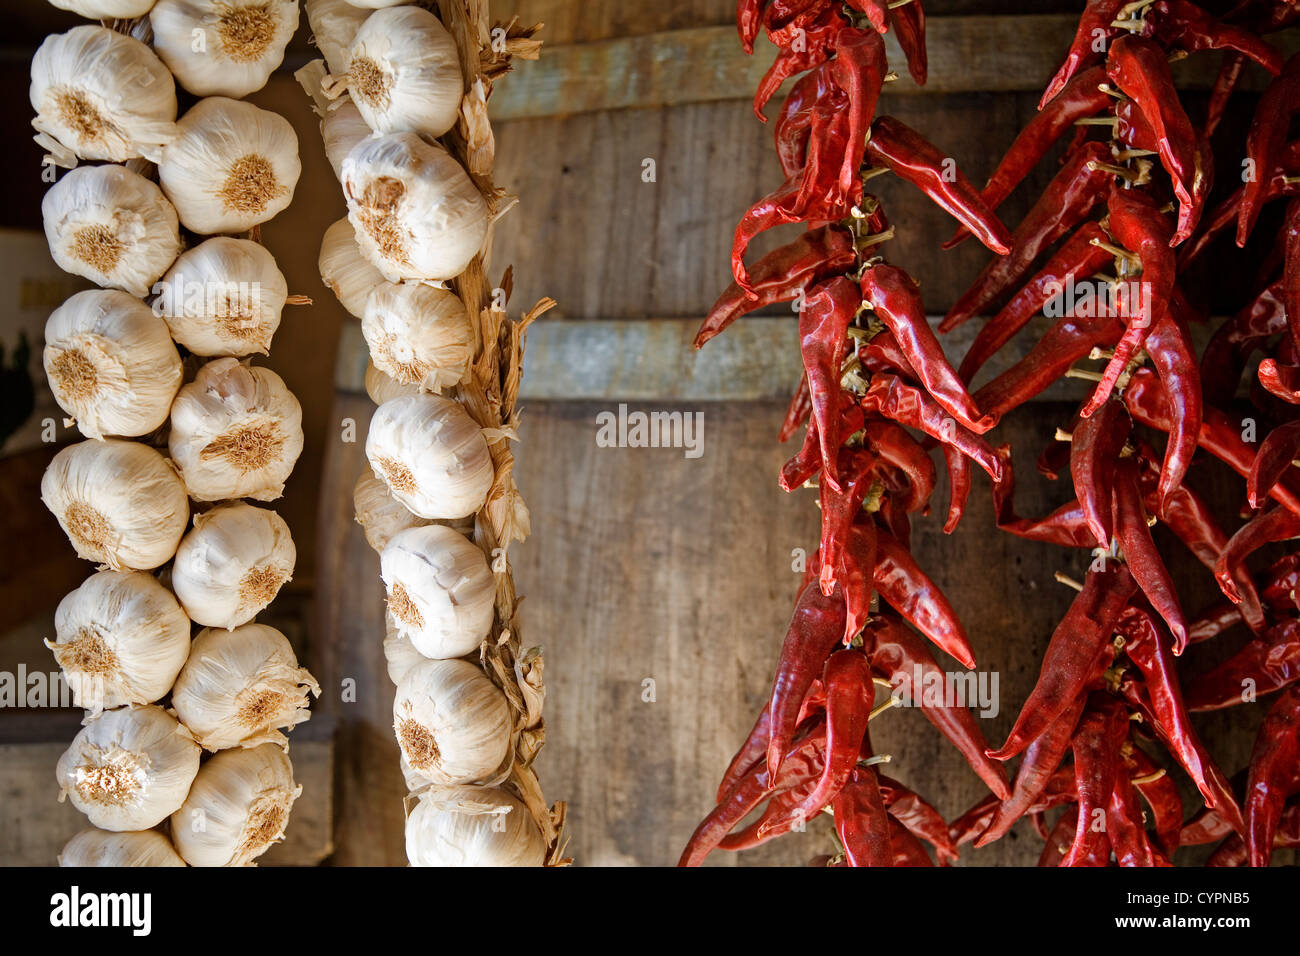 string of garlic and dried peppers ristra de ajos y pimientos secos Stock Photo